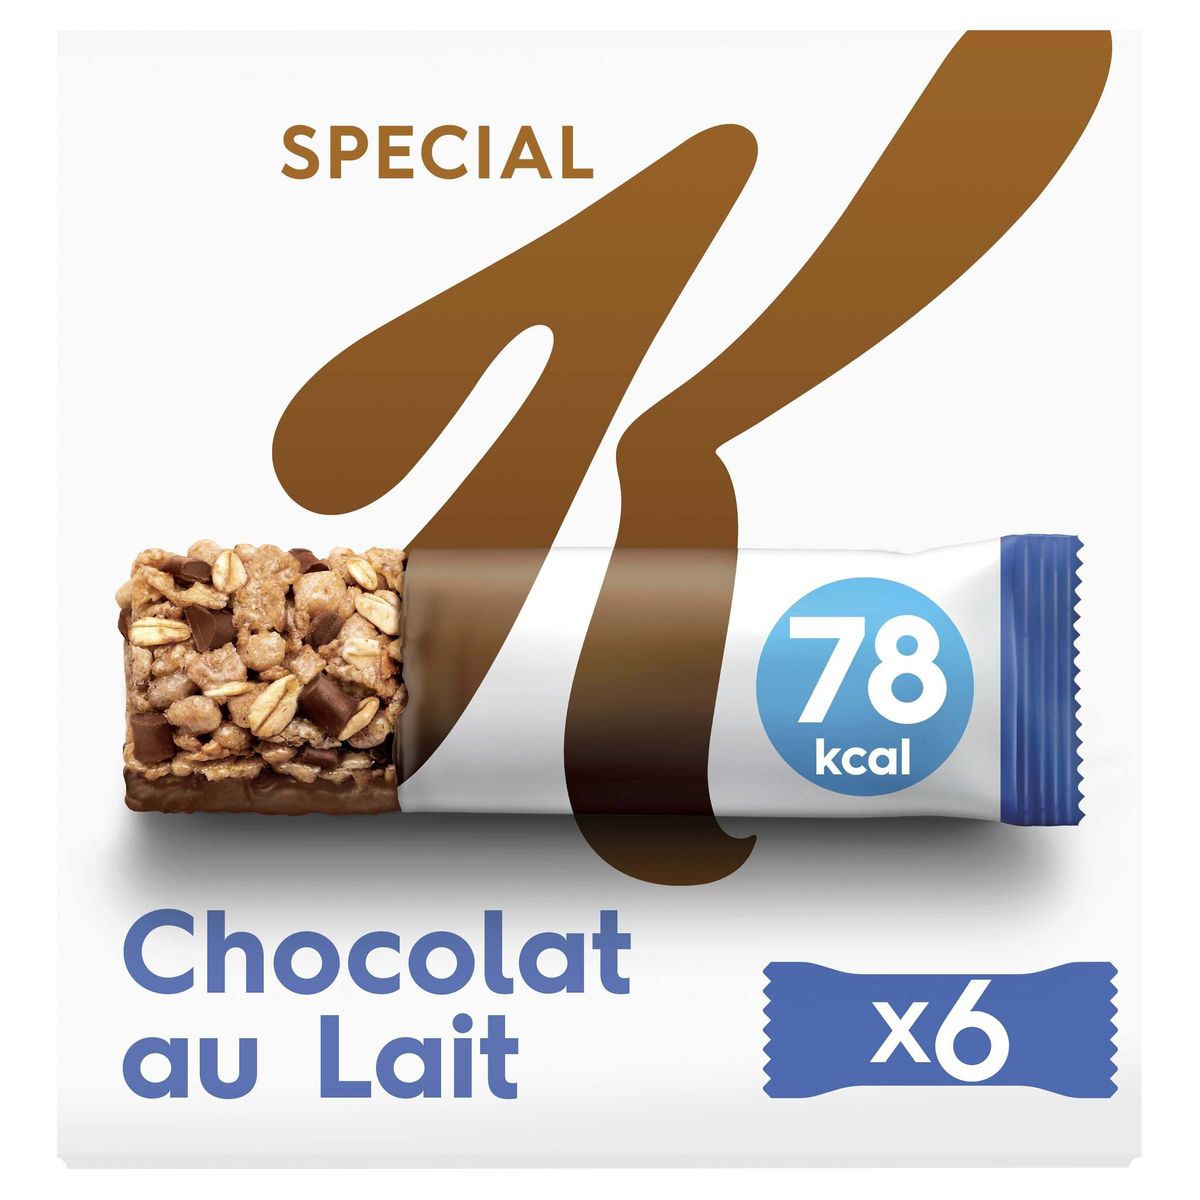 Kellogg's Special K Melkchocolade 6 x 20 g